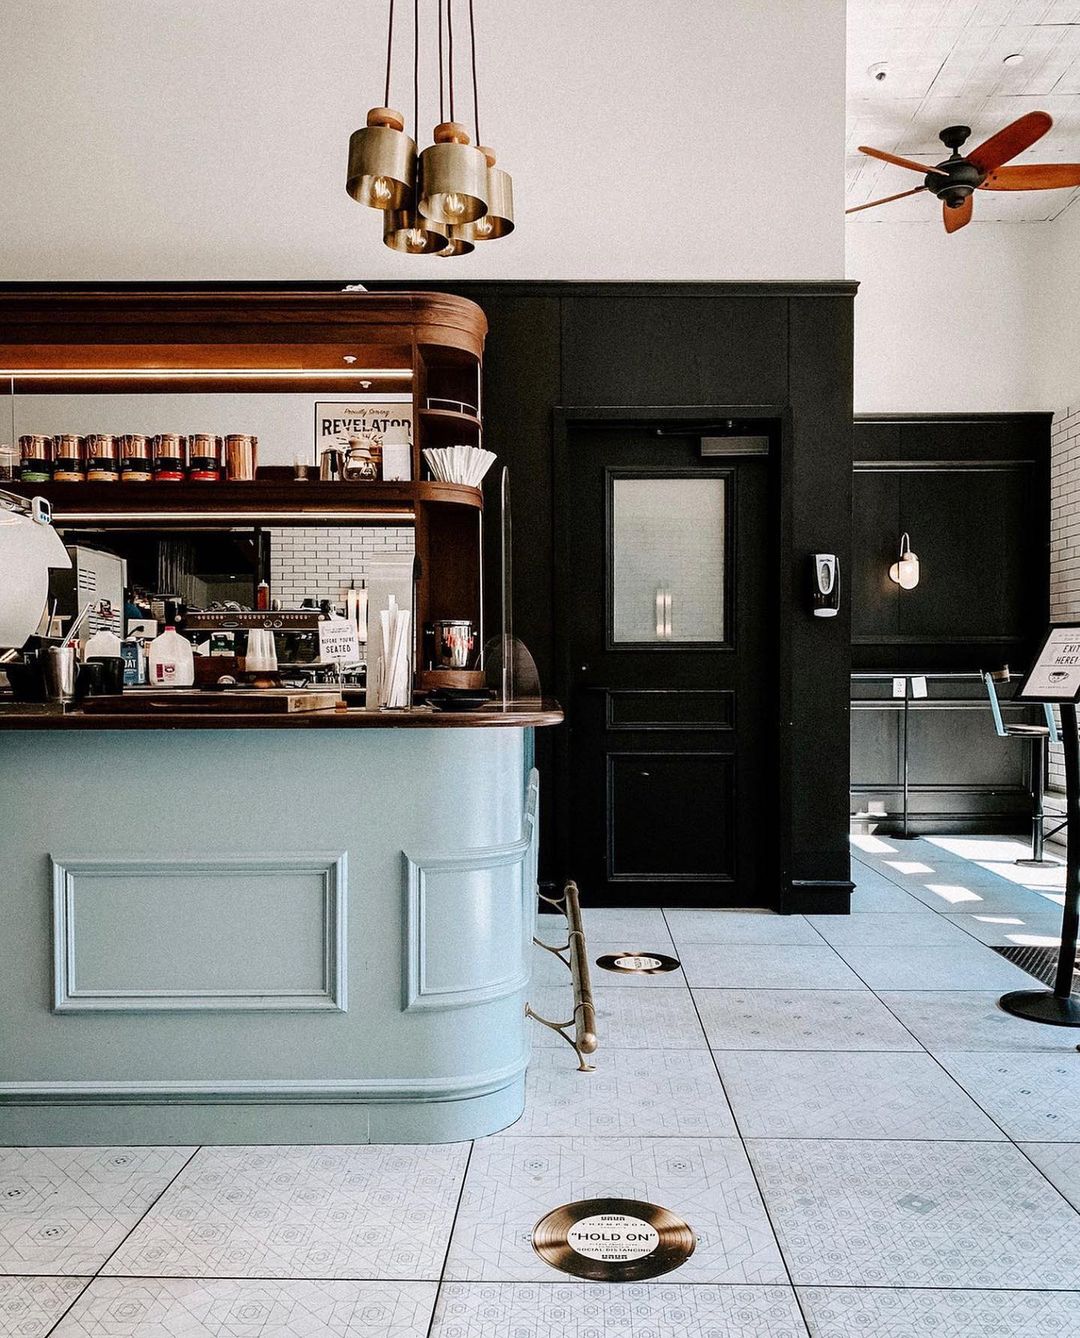 Coffe Bar  Coffee bar home, Coffee bar design, Coffee bars in kitchen